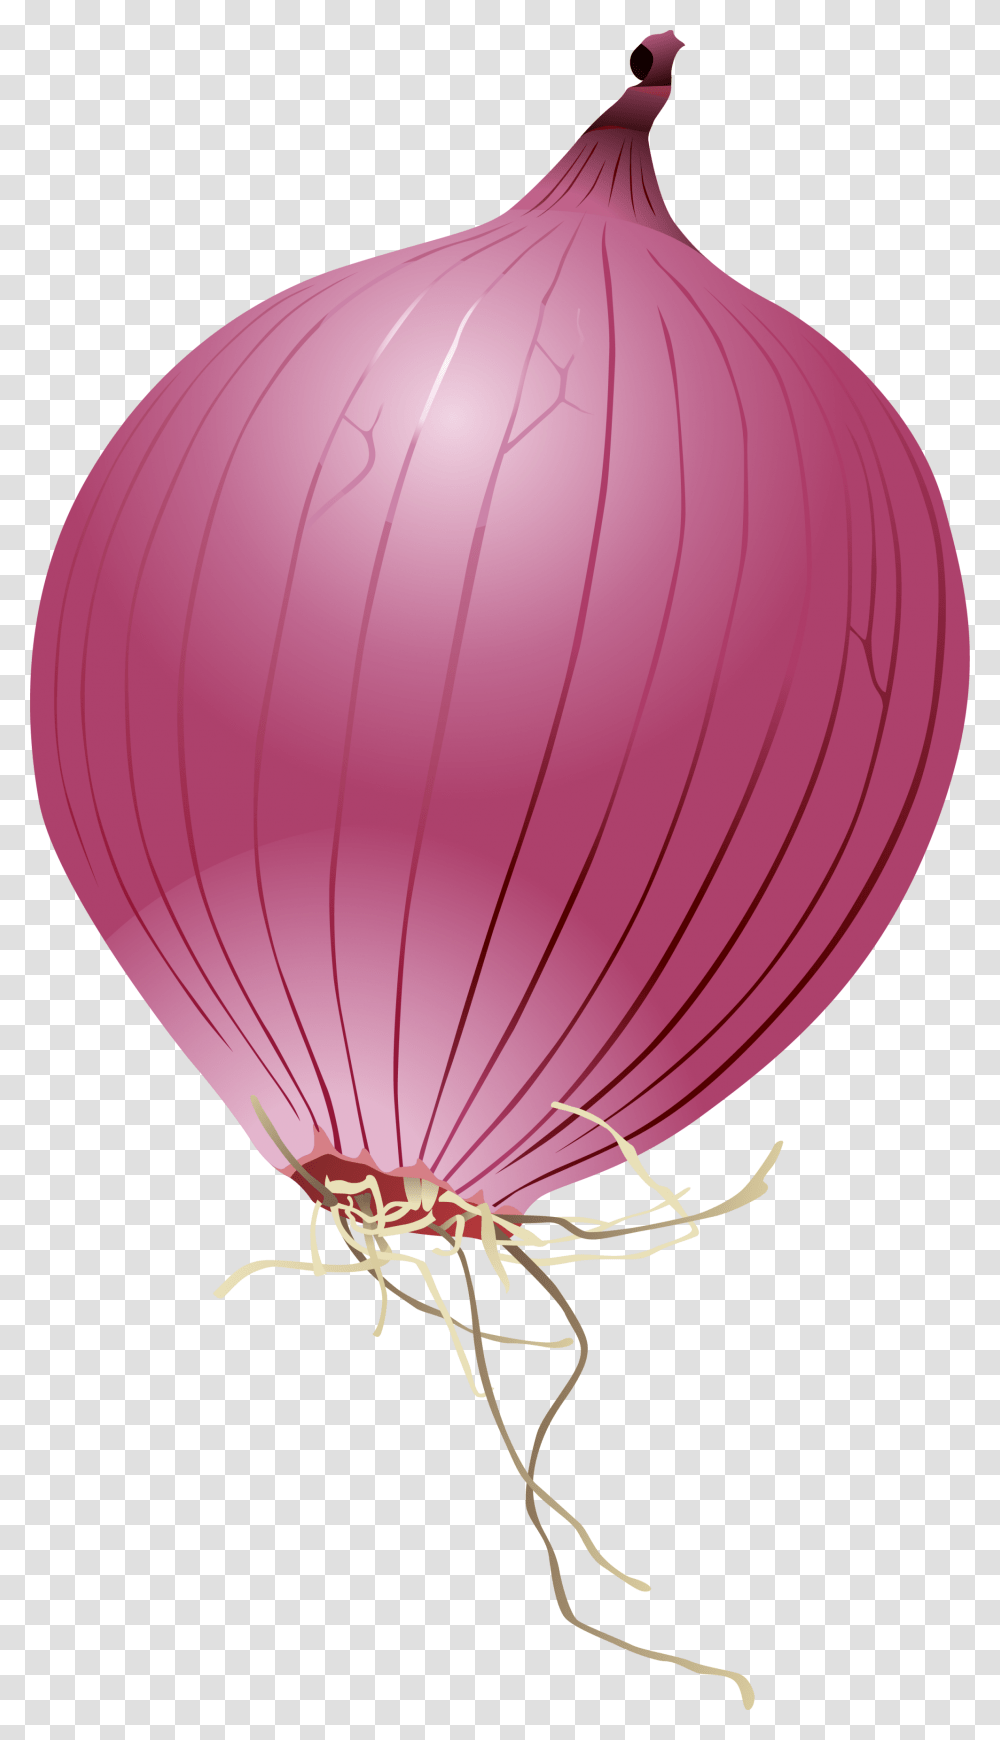 Single Onion Photo Red Onion Onion Cartoon, Ball, Balloon, Parachute Transparent Png